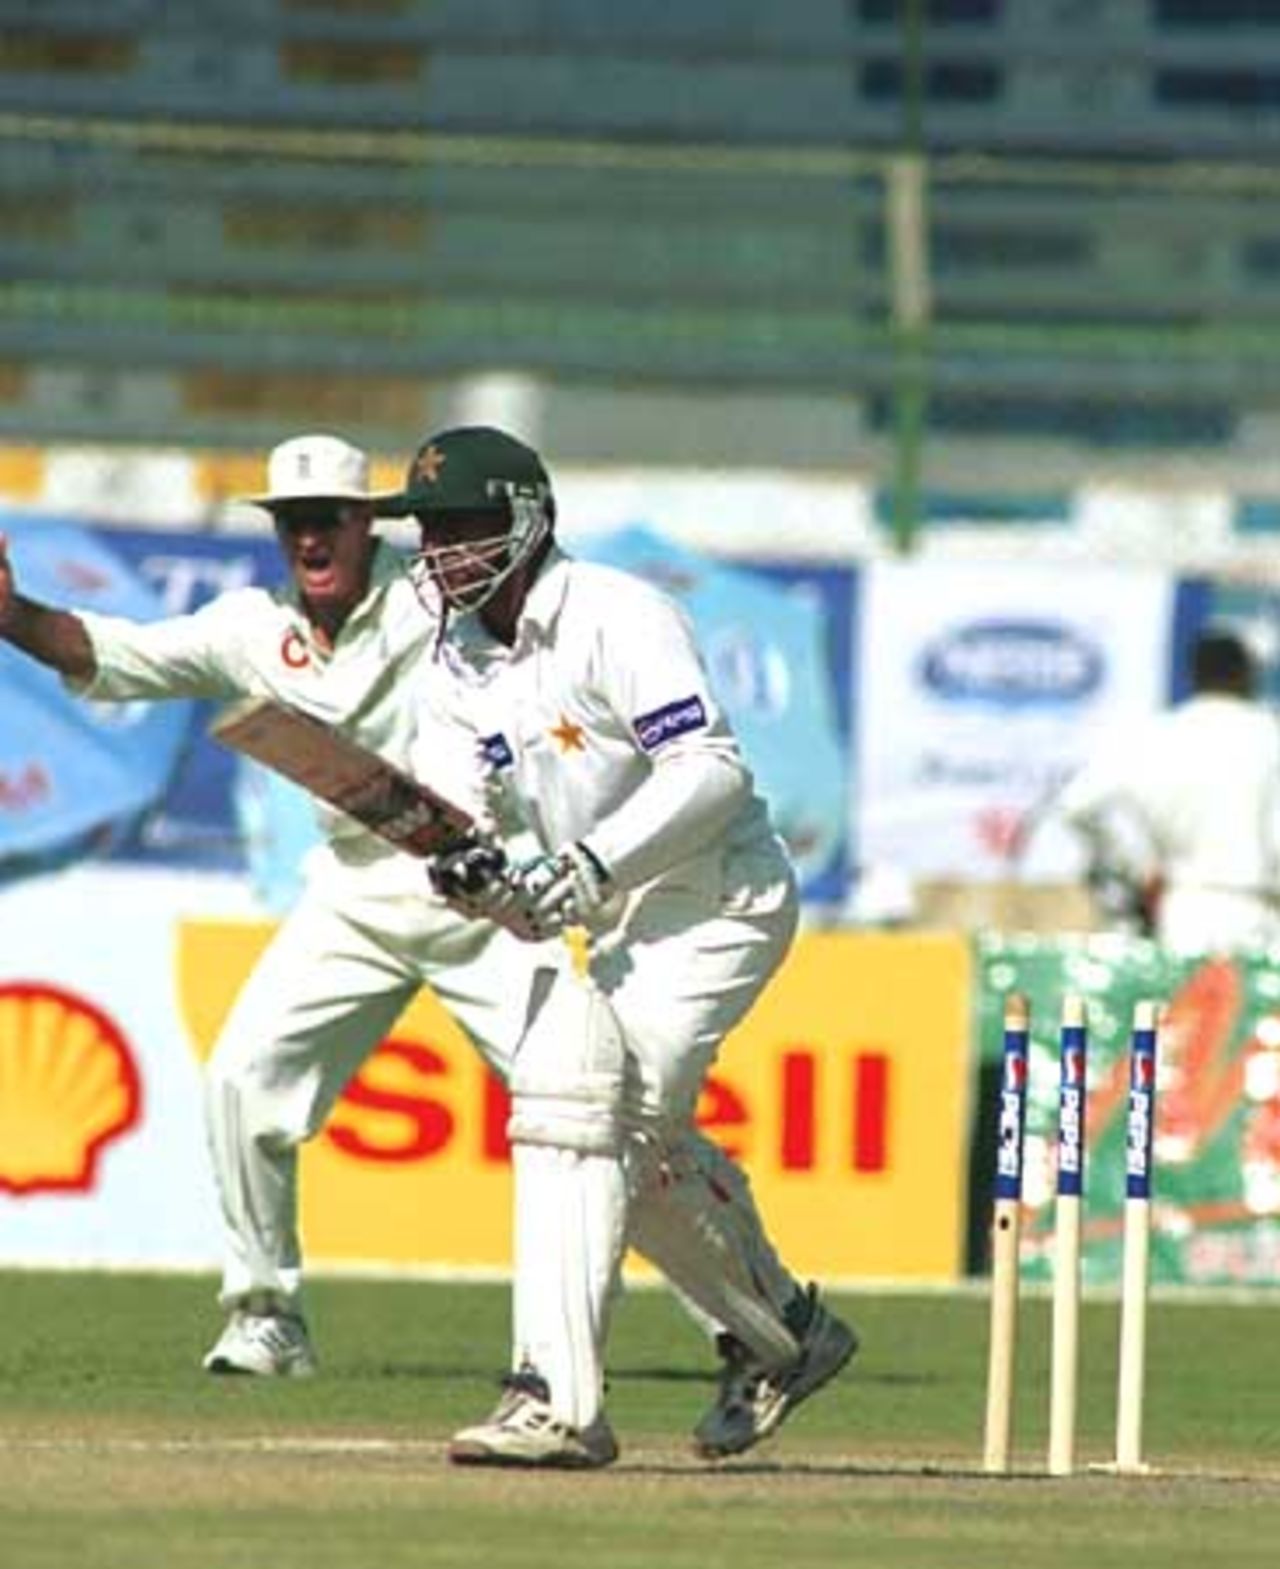 Elahi manages 28 as he is bowled by Caddick, Day 1, 3rd Test Match, Pakistan v England at Karachi, 7 Dec-11 Dec 2000.